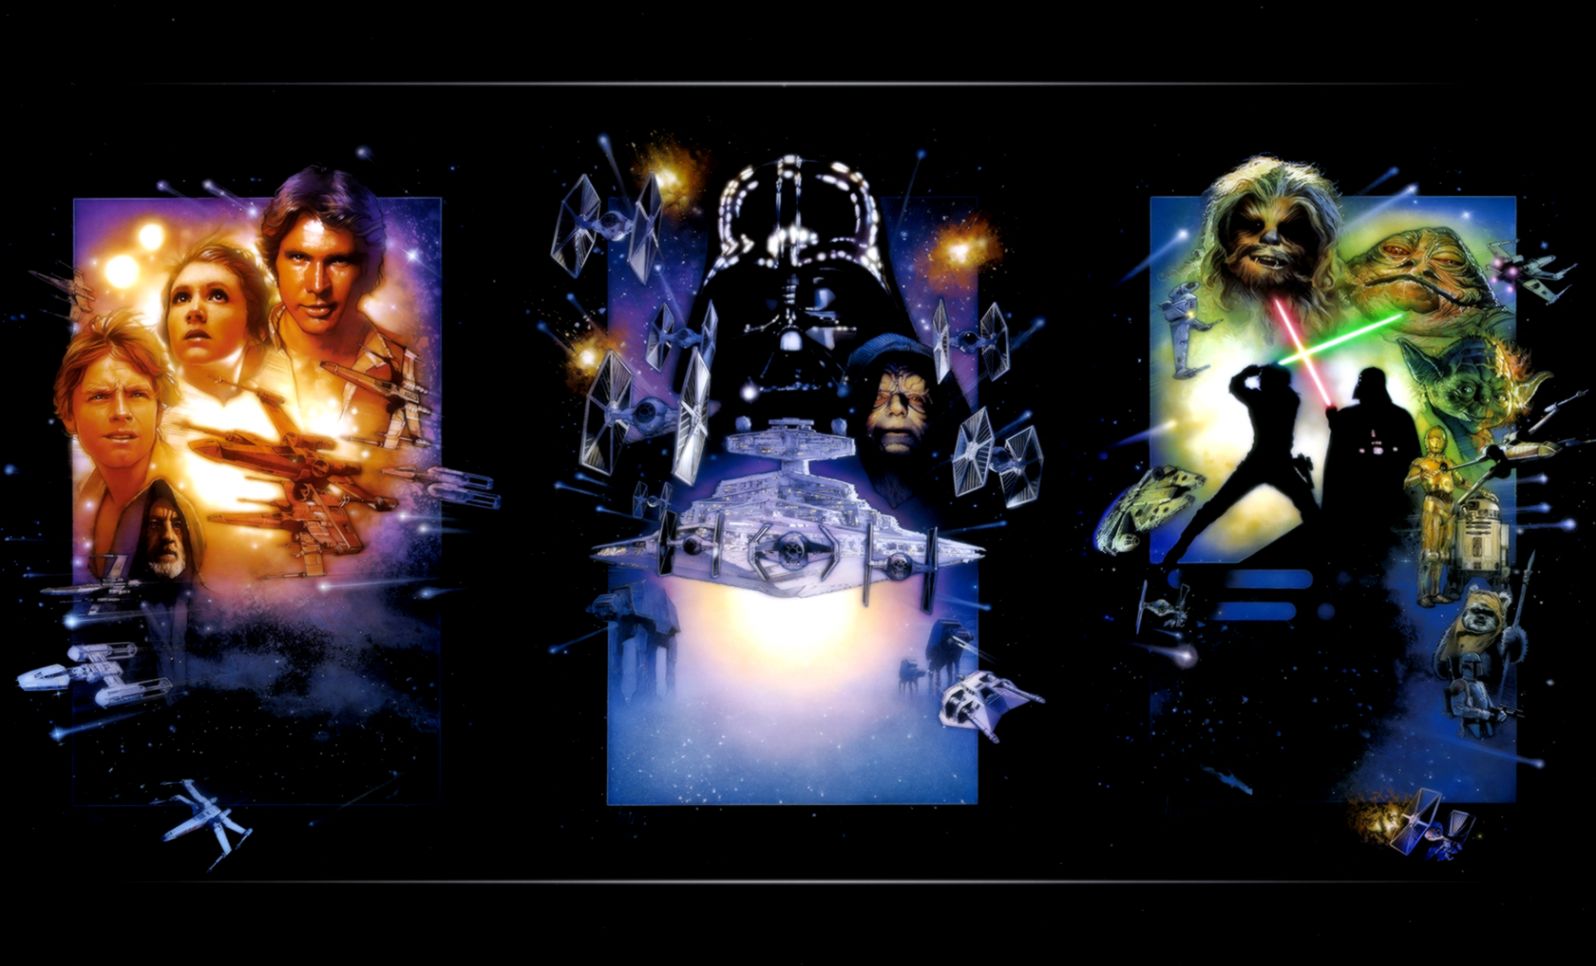 The Star Wars Trilogy Computer Wallpaper Desktop Background Wars Episode V The Empire Strikes Back Cover HD Wallpaper